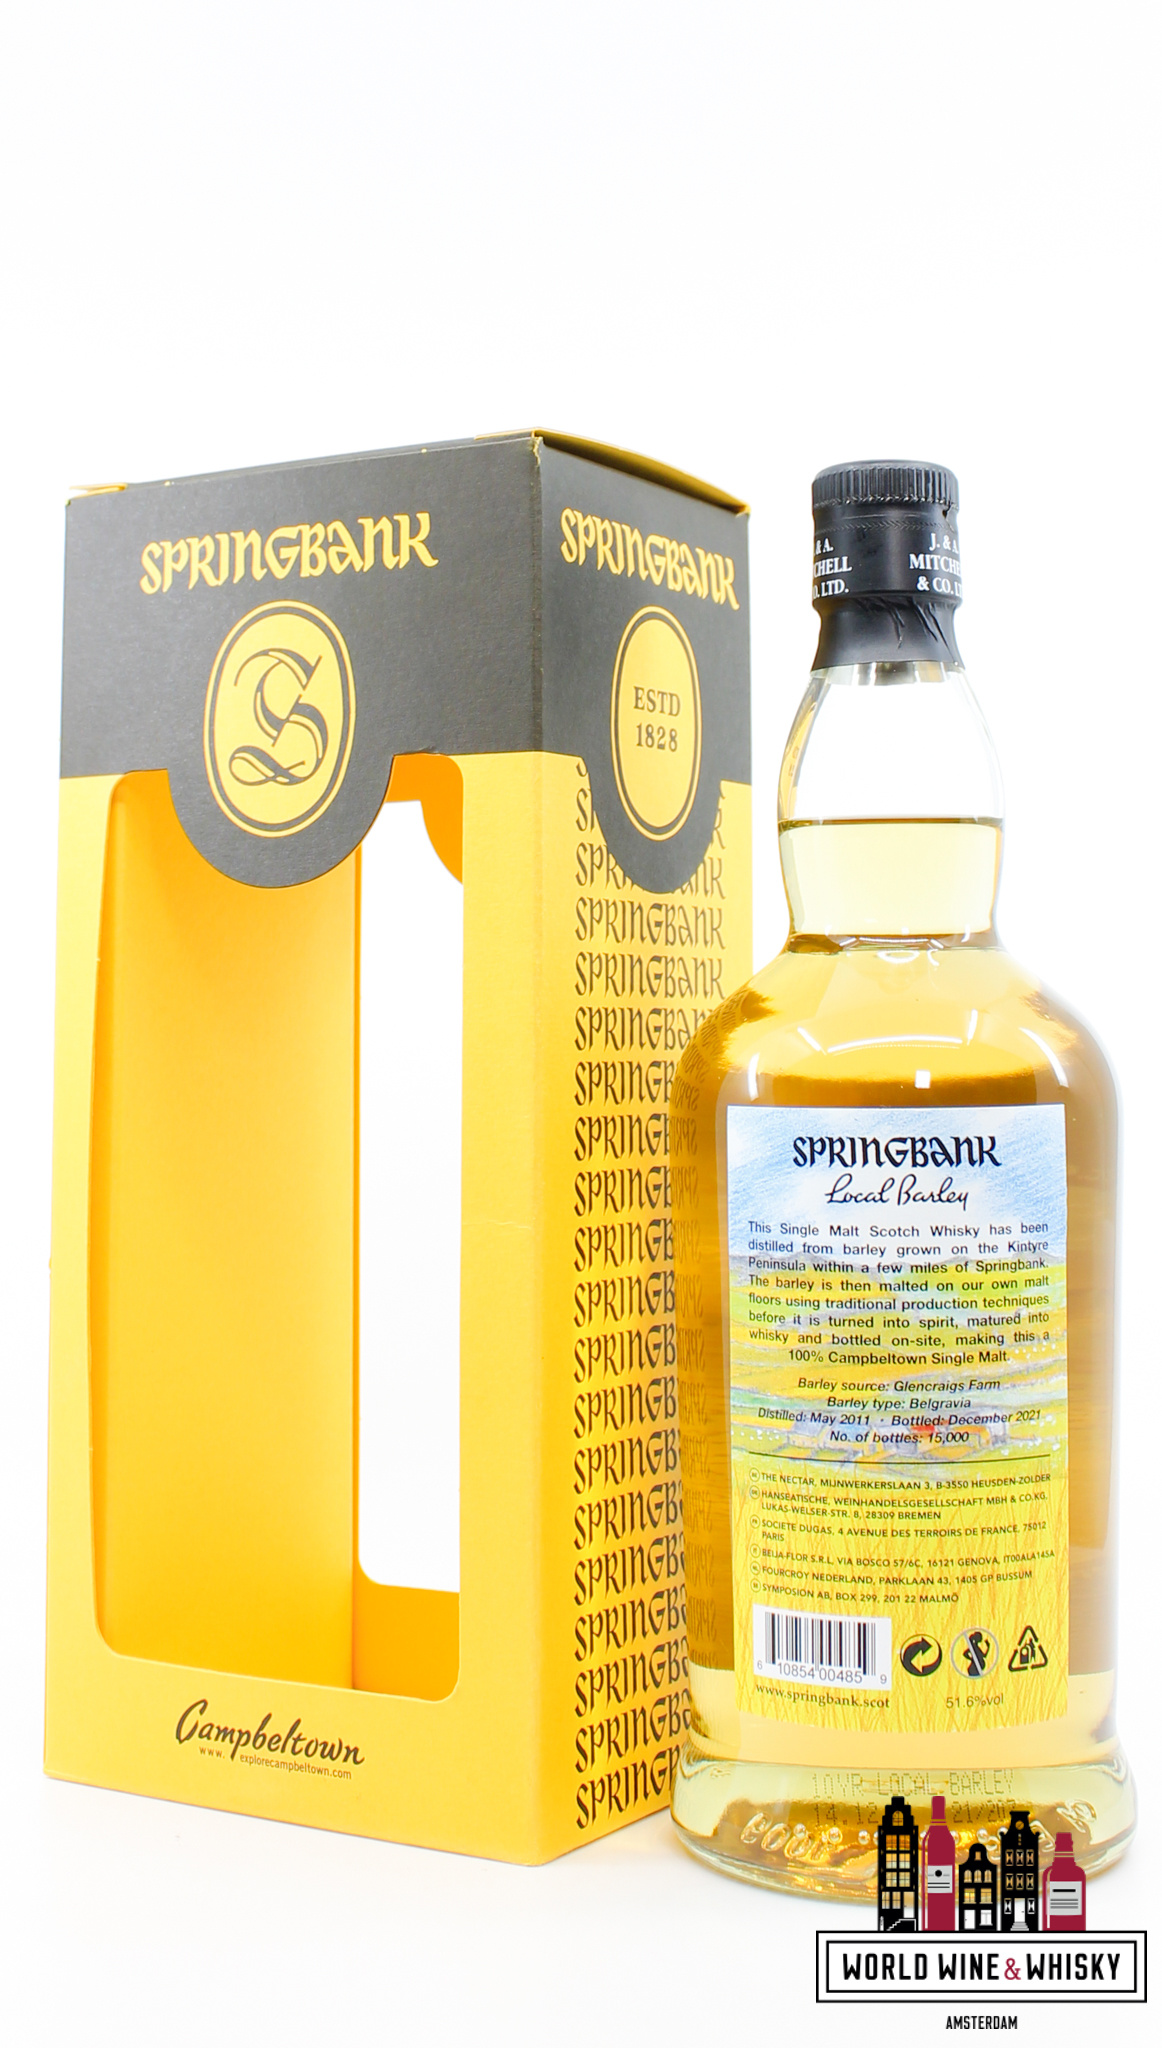 Springbank Springbank 10 Years Old 2011 2021 - Local Barley 51.6% (1 of 15000) - new